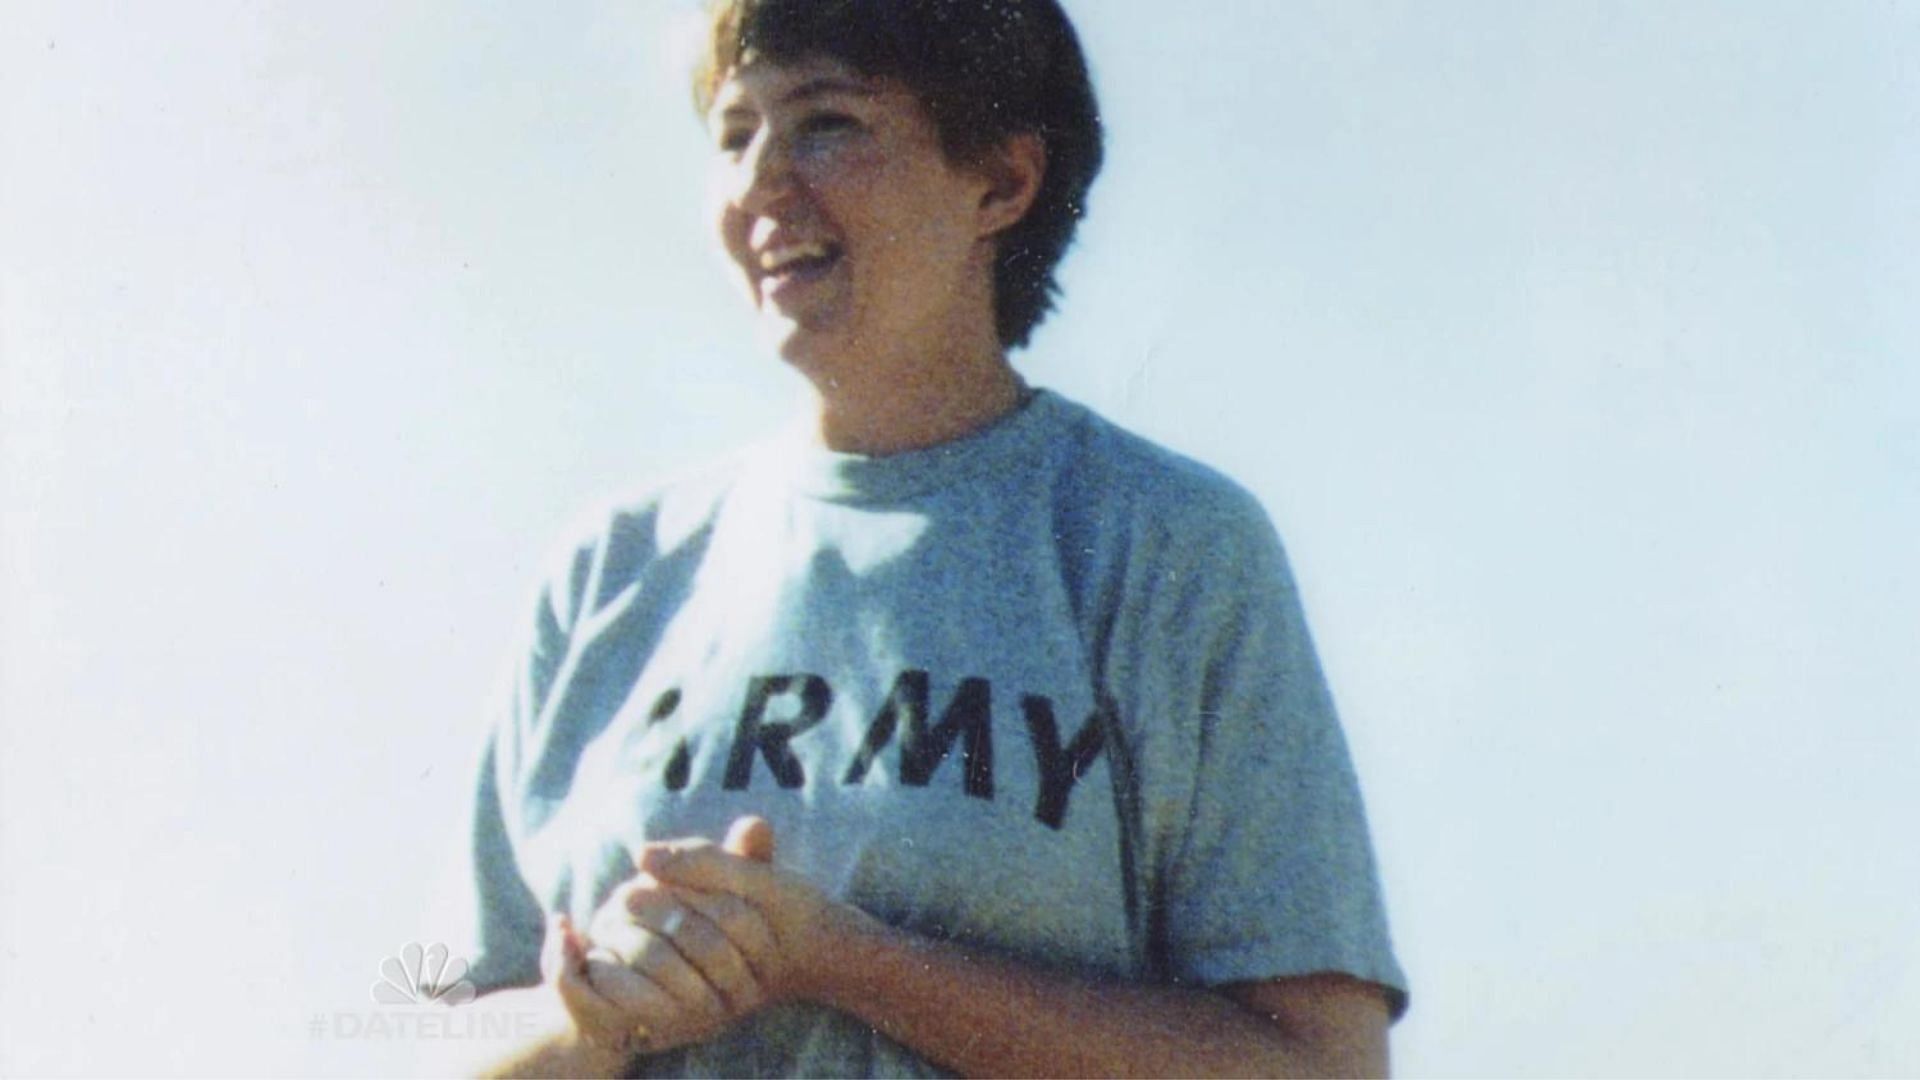 A still of Lynn Armstrong Reister (Image via NBC News/Google)